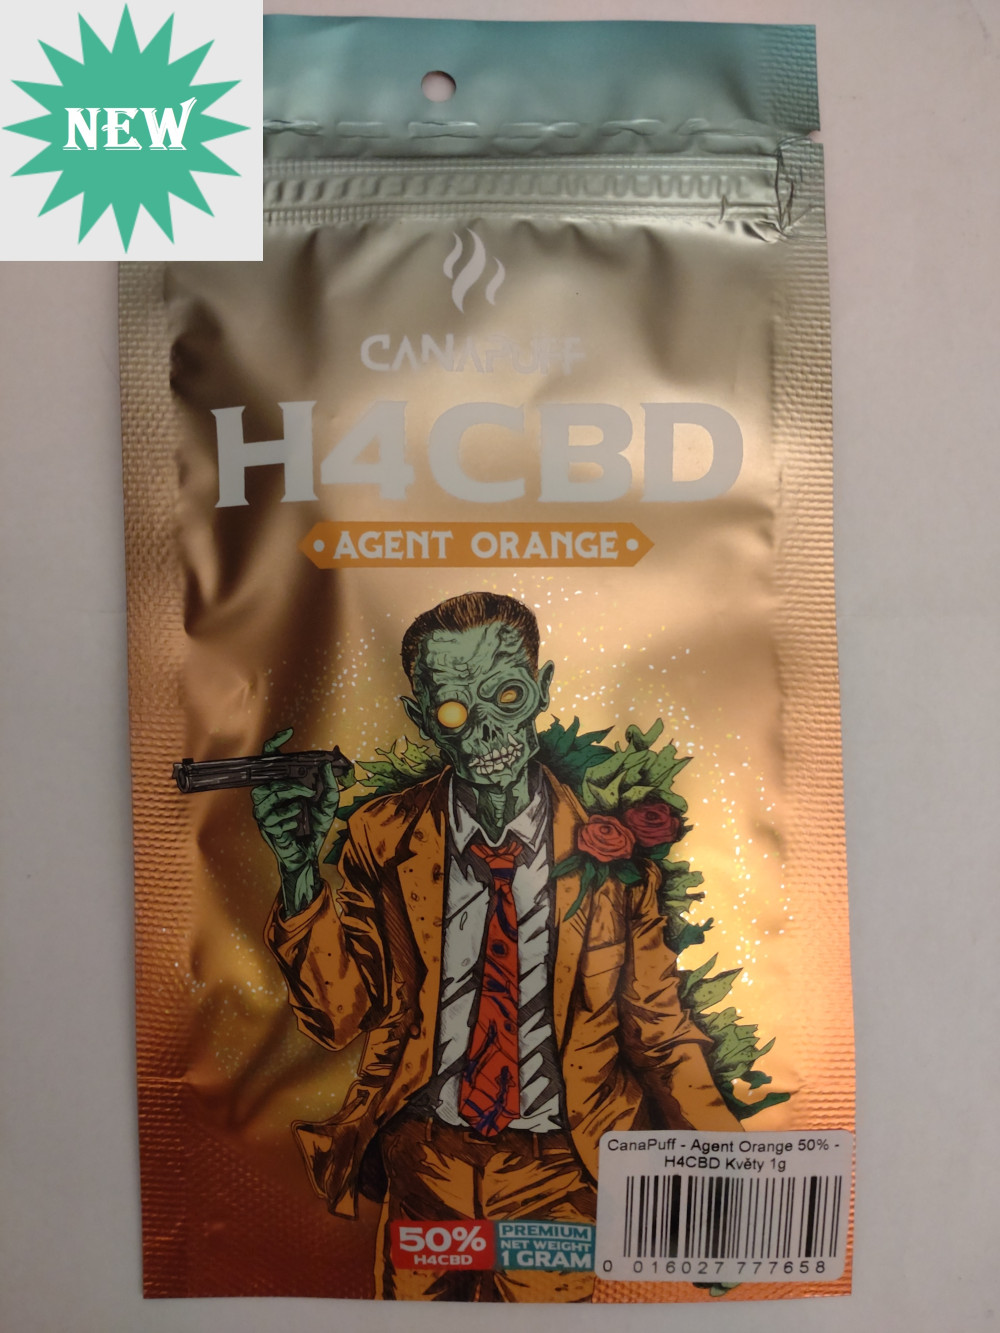 Canapuff - Agent Orange 1g /H4CBD cannabis/